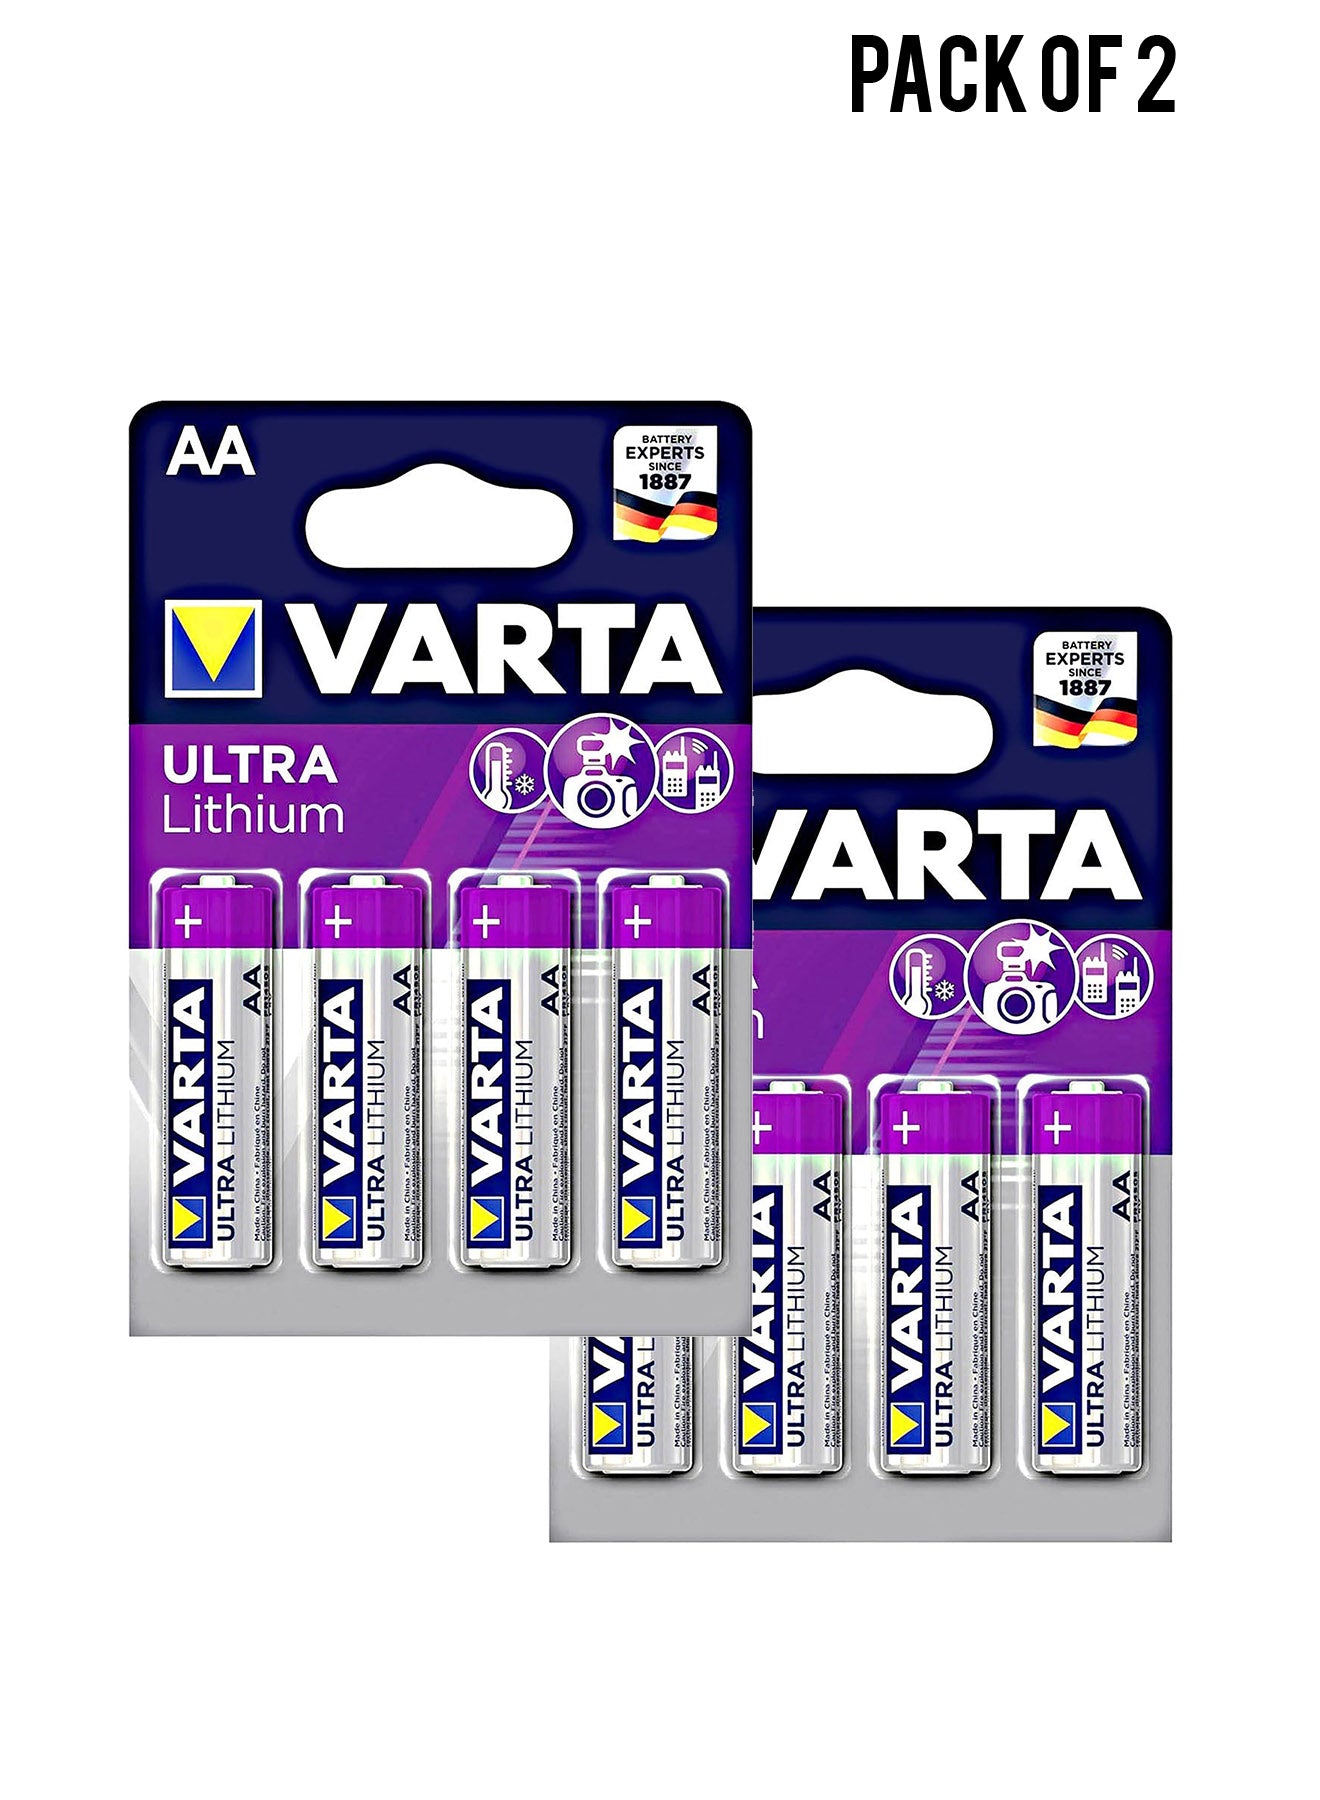 Varta Ultra Lithium AA LR06 Batteries 4 Units Value Pack of 2 